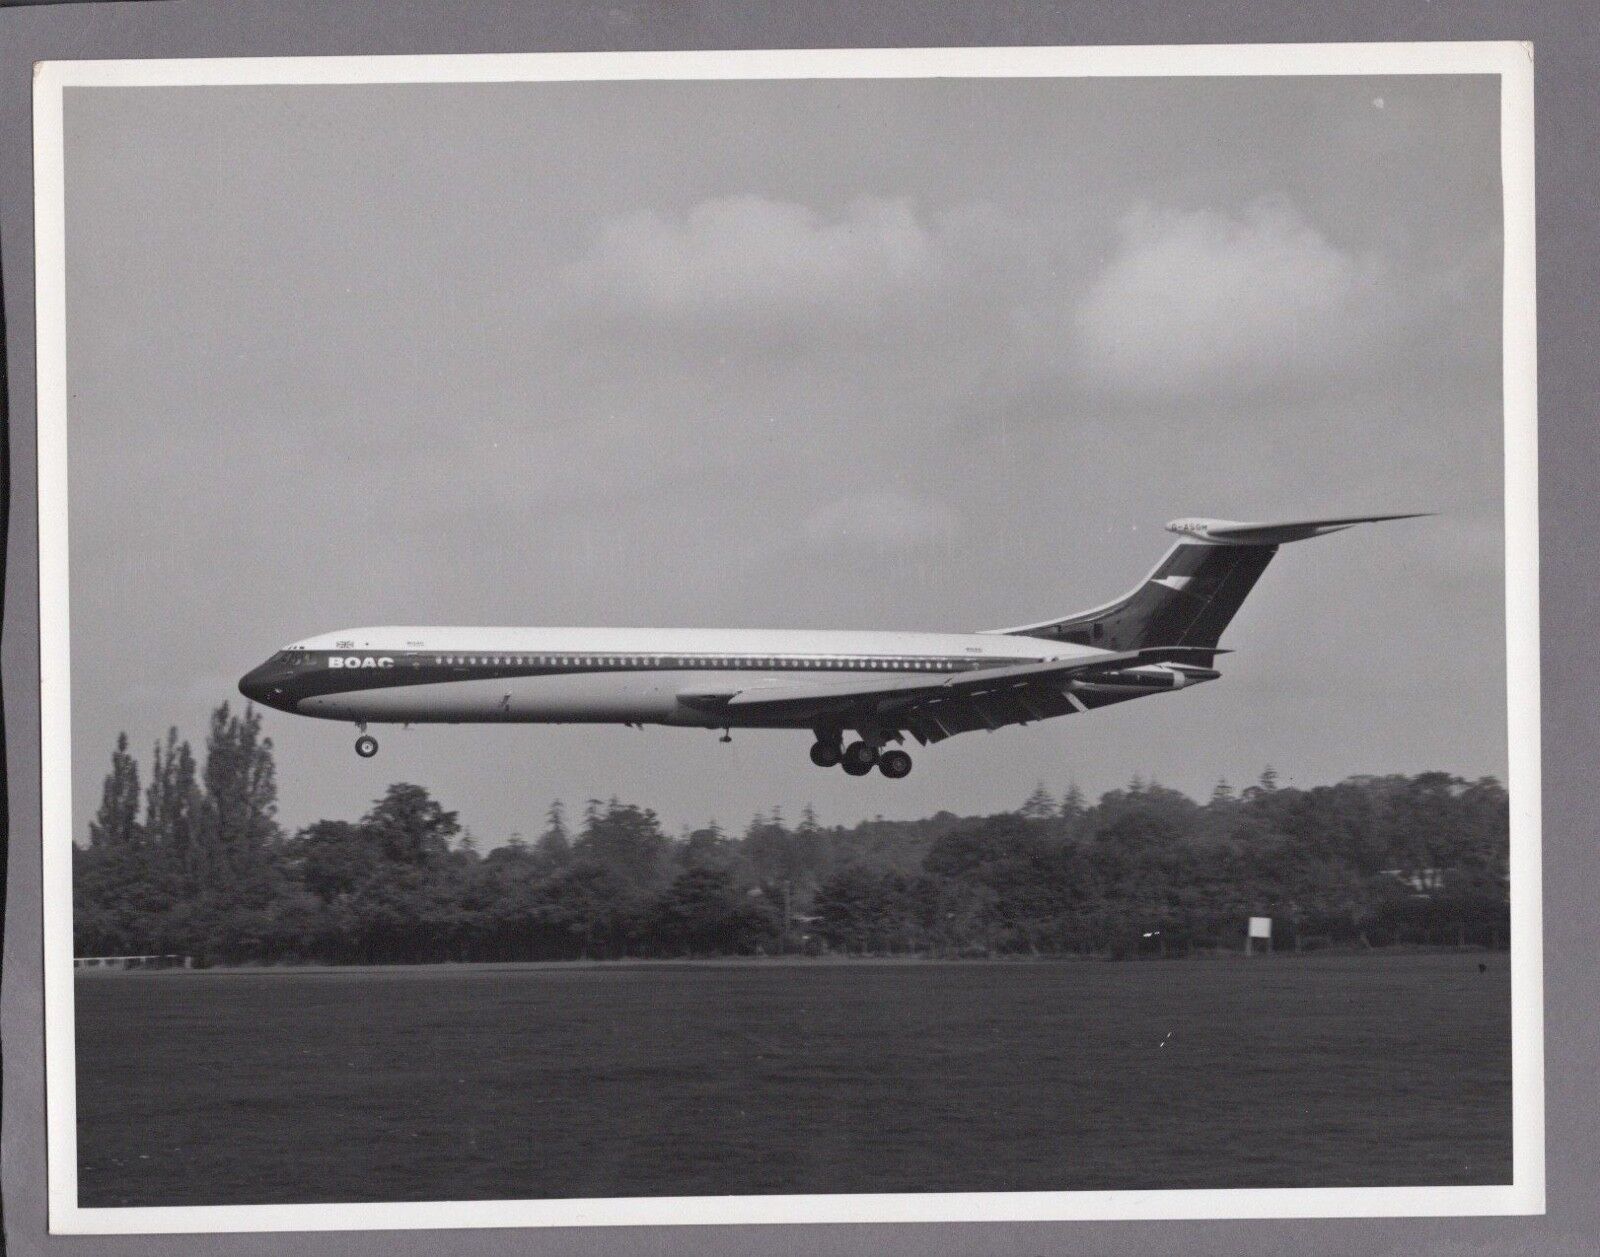 BOAC VICKERS SUPER VC10 LARGE ORIGINAL VINTAGE AIRLINE PHOTO 4